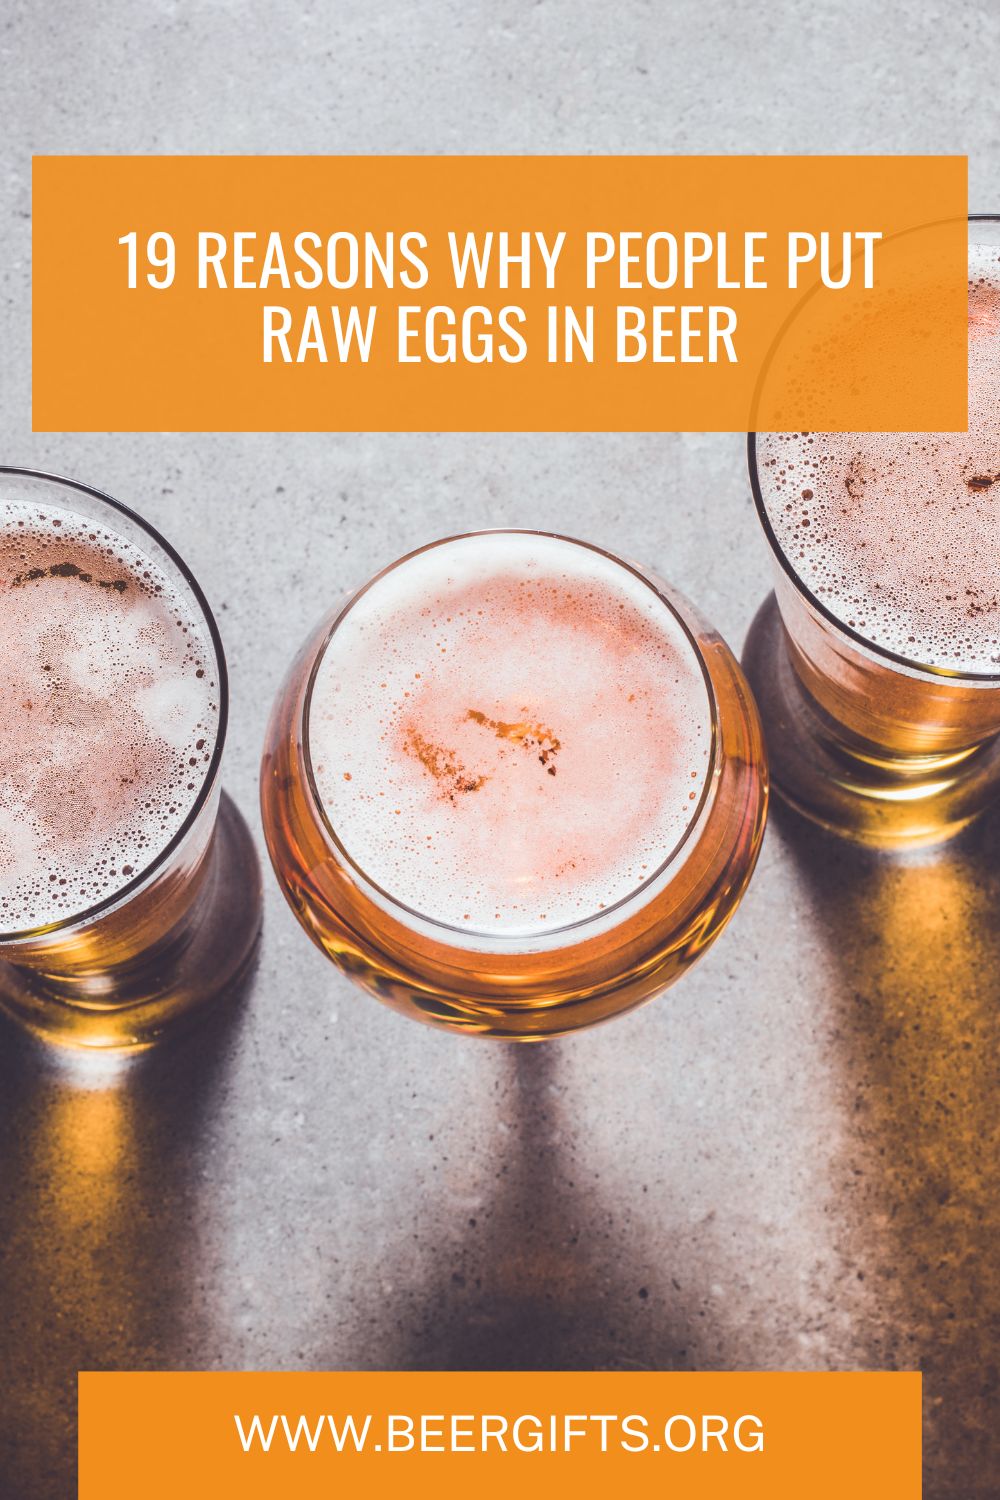 19 Reasons Why People Put Raw Eggs in Beer1